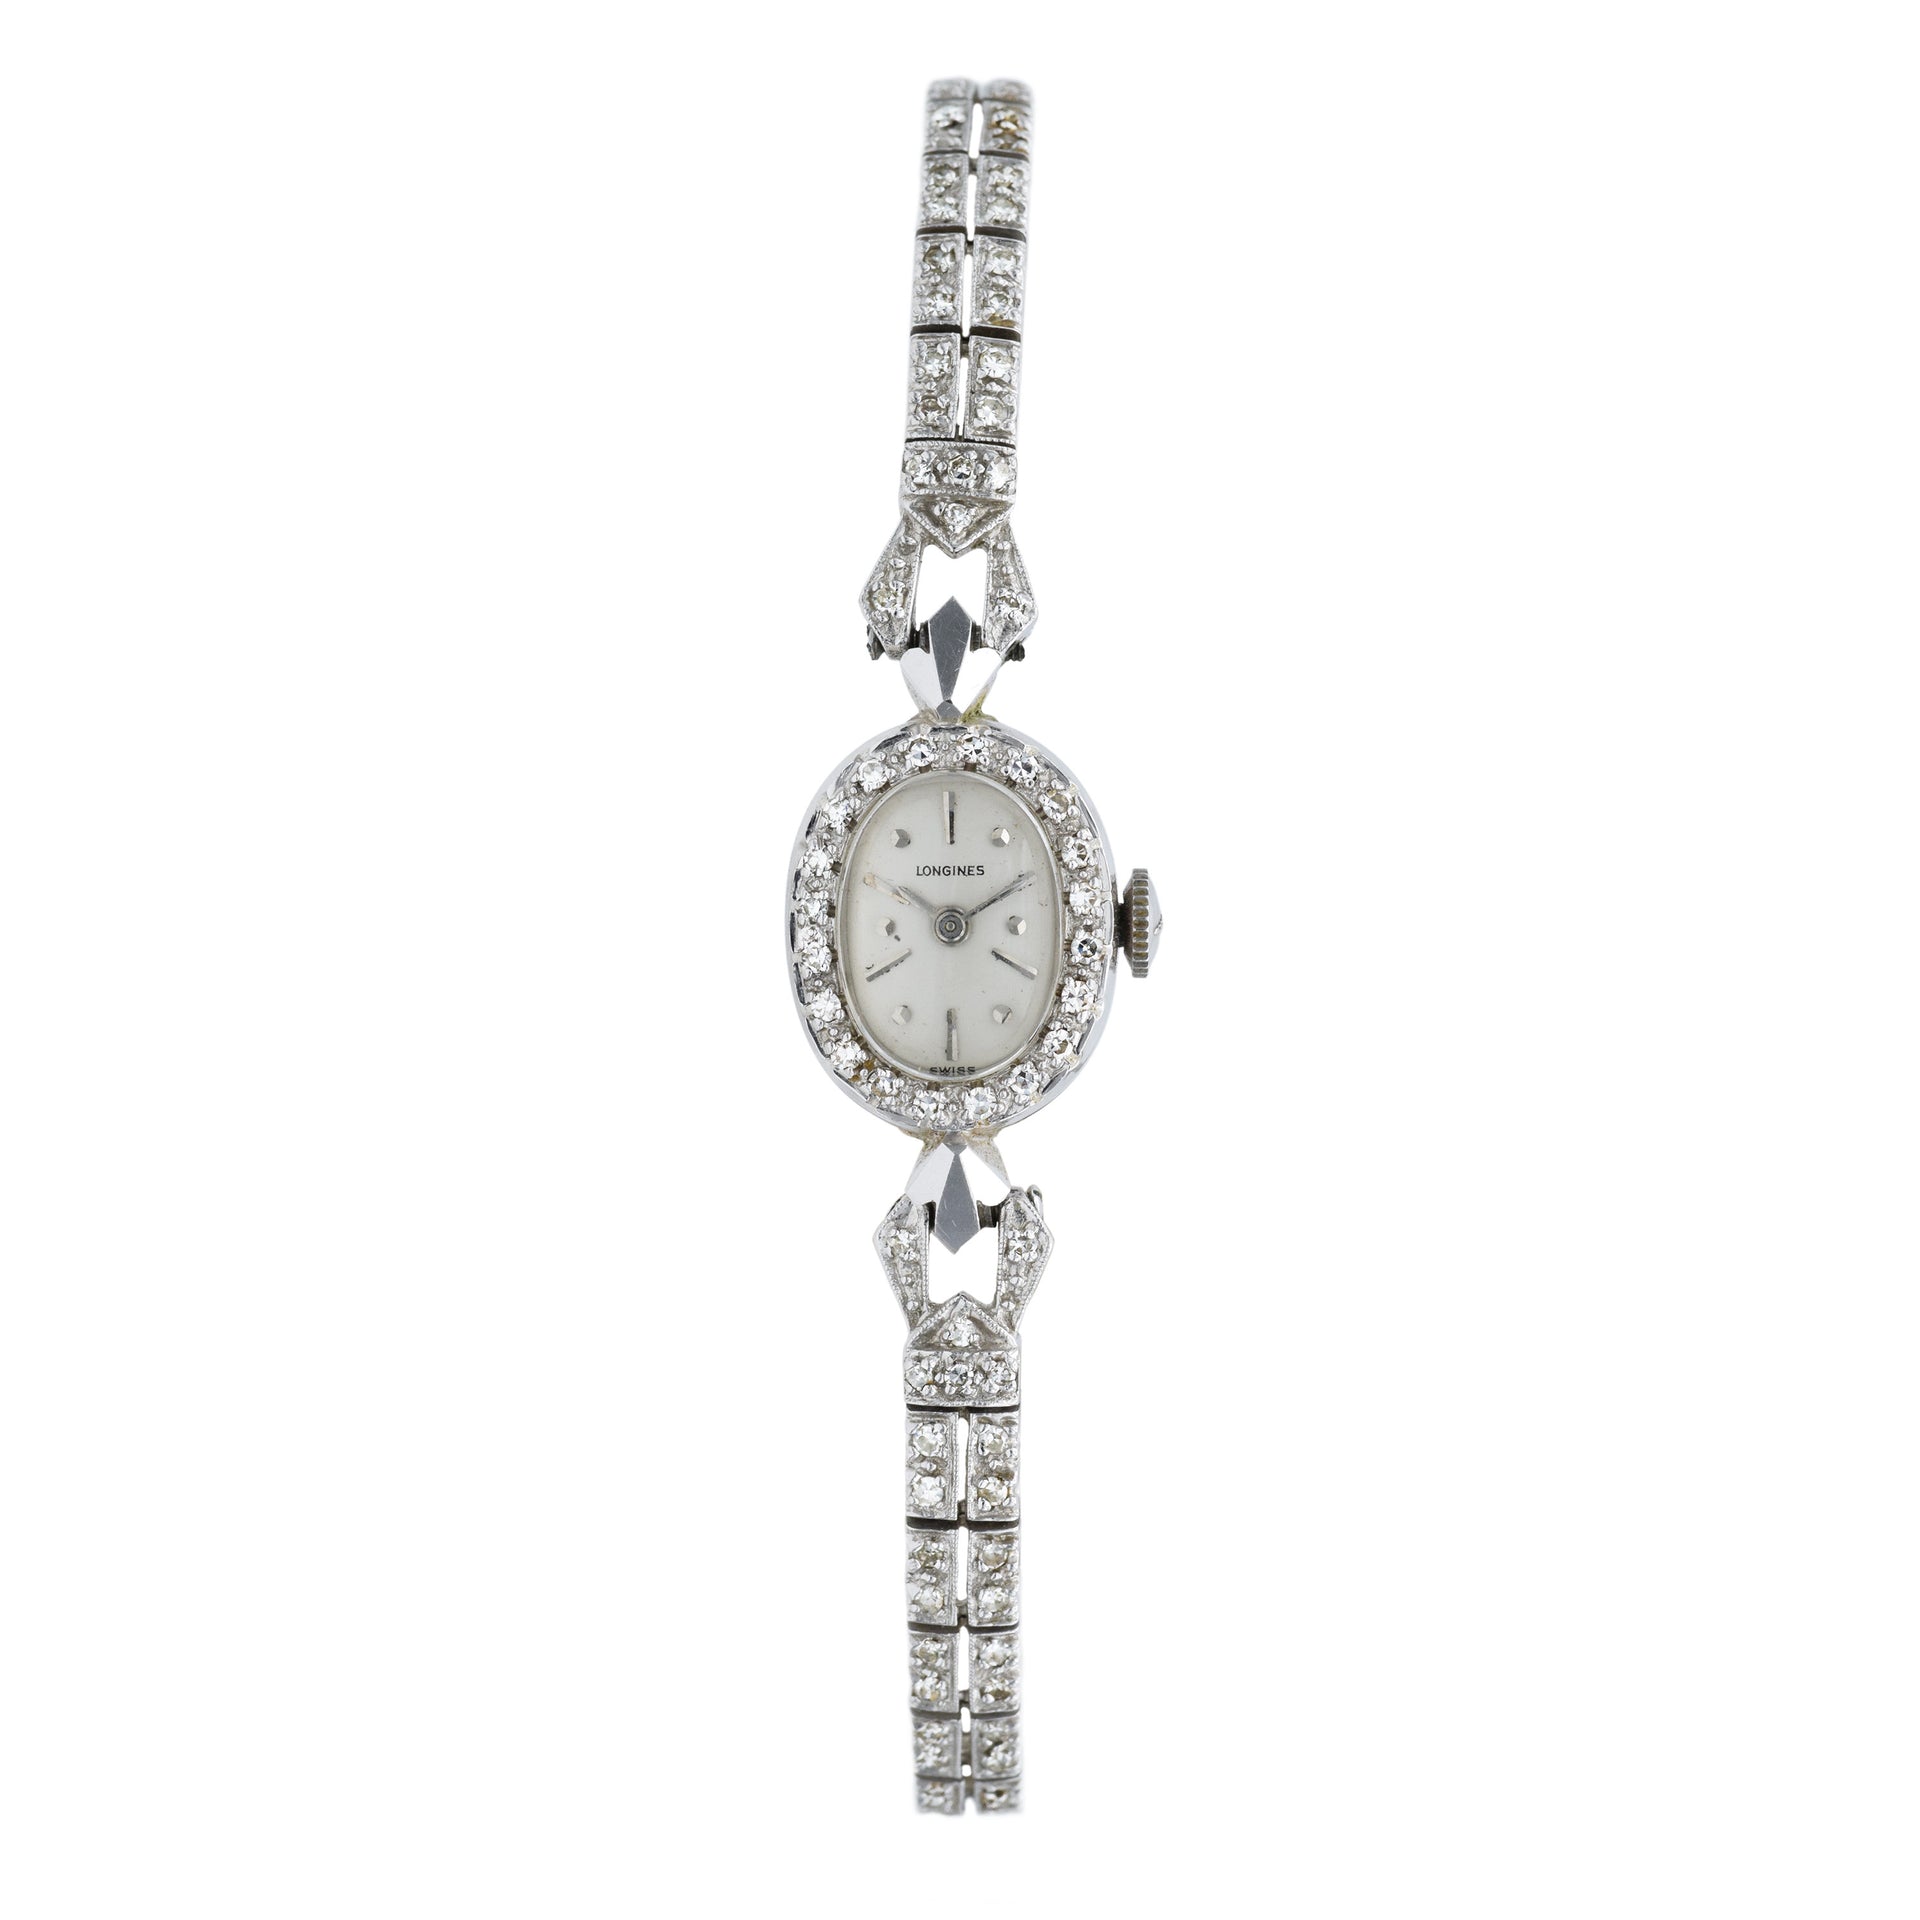 Vintage 1950s Longines Diamond Watch